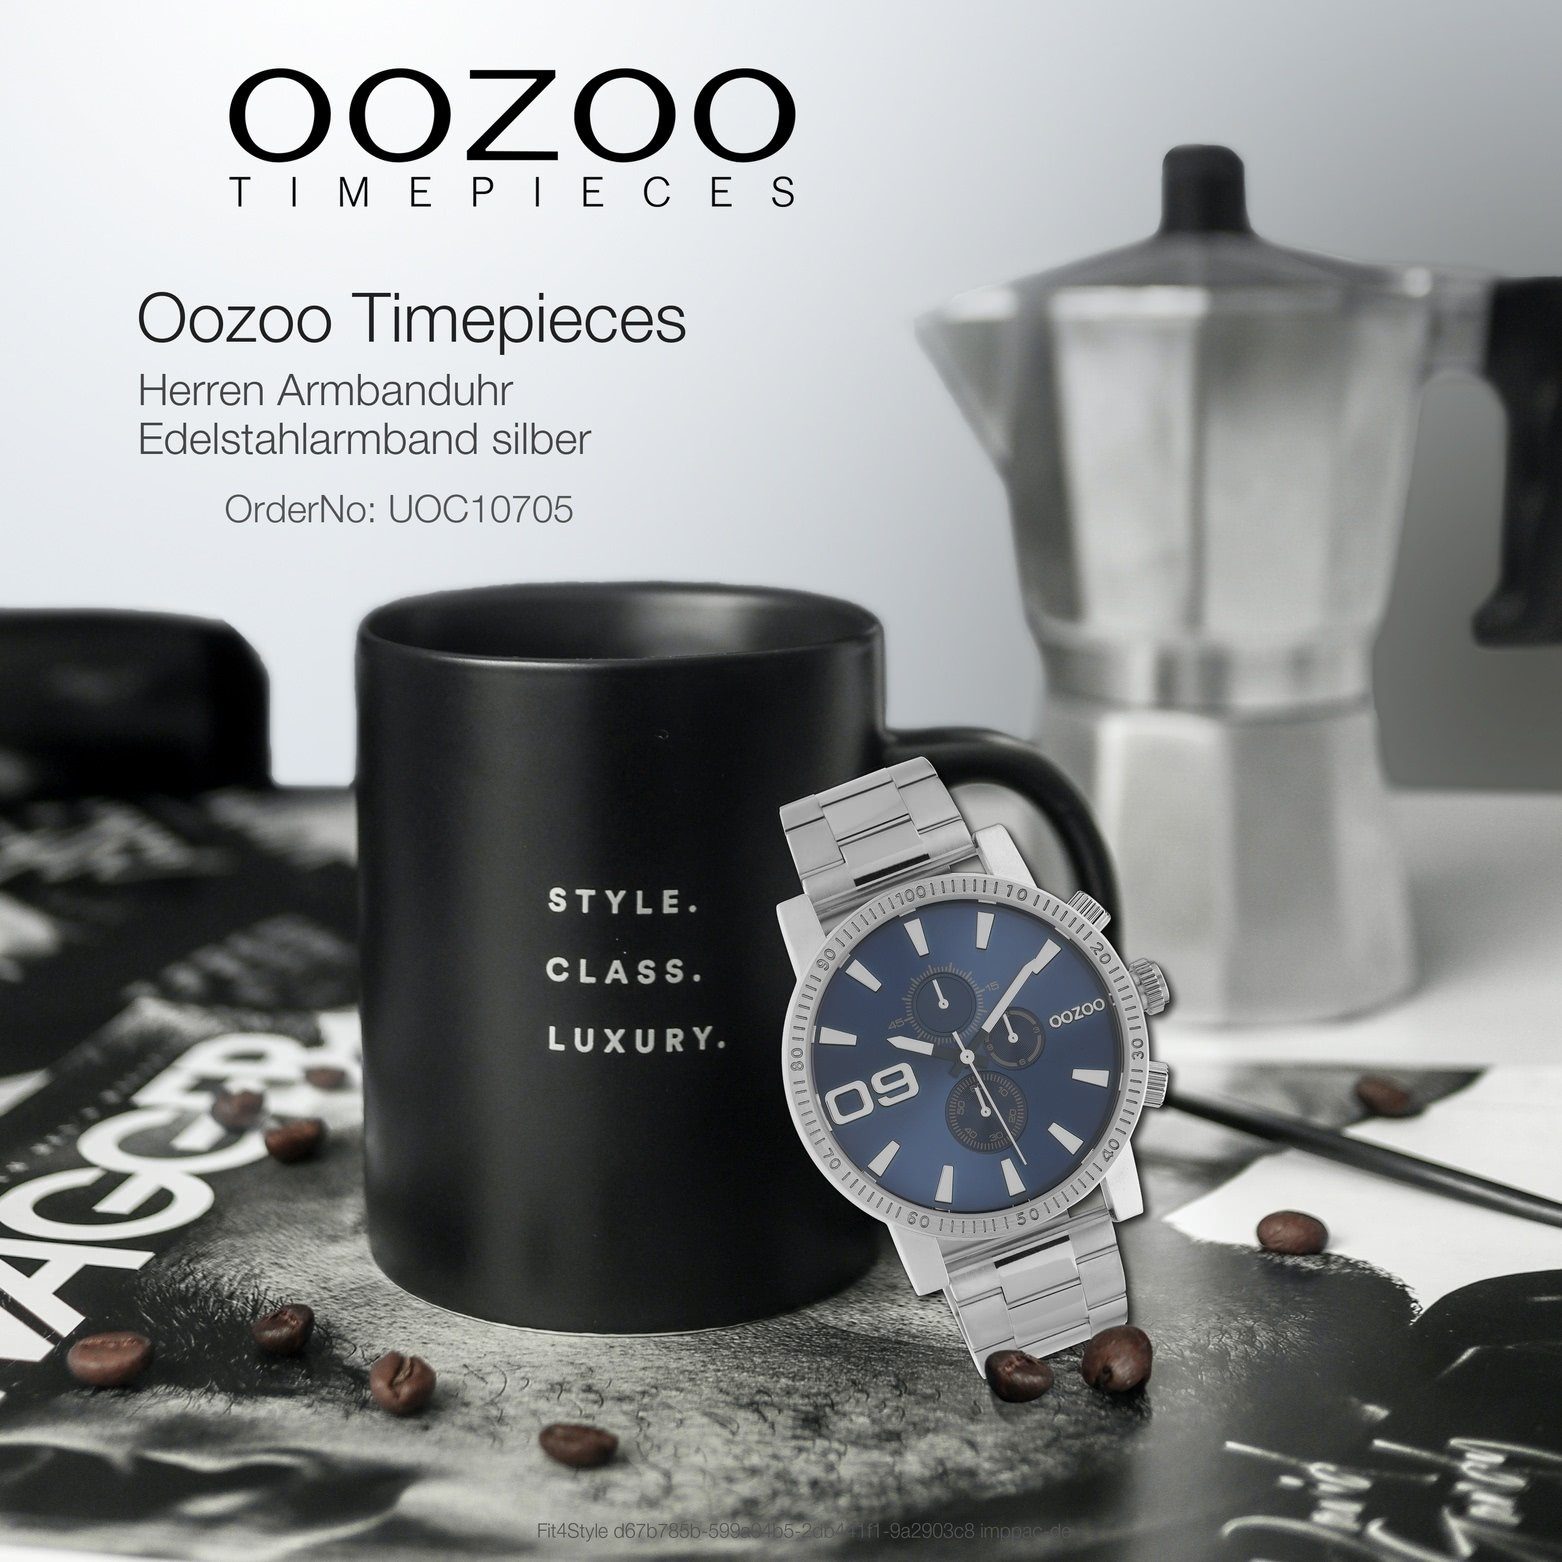 Oozoo OOZOO rund, Analog, Quarzuhr 45mm) groß Edelstahlarmband, Herrenuhr Armbanduhr Herren Edelstahl Elegant-Style (ca.